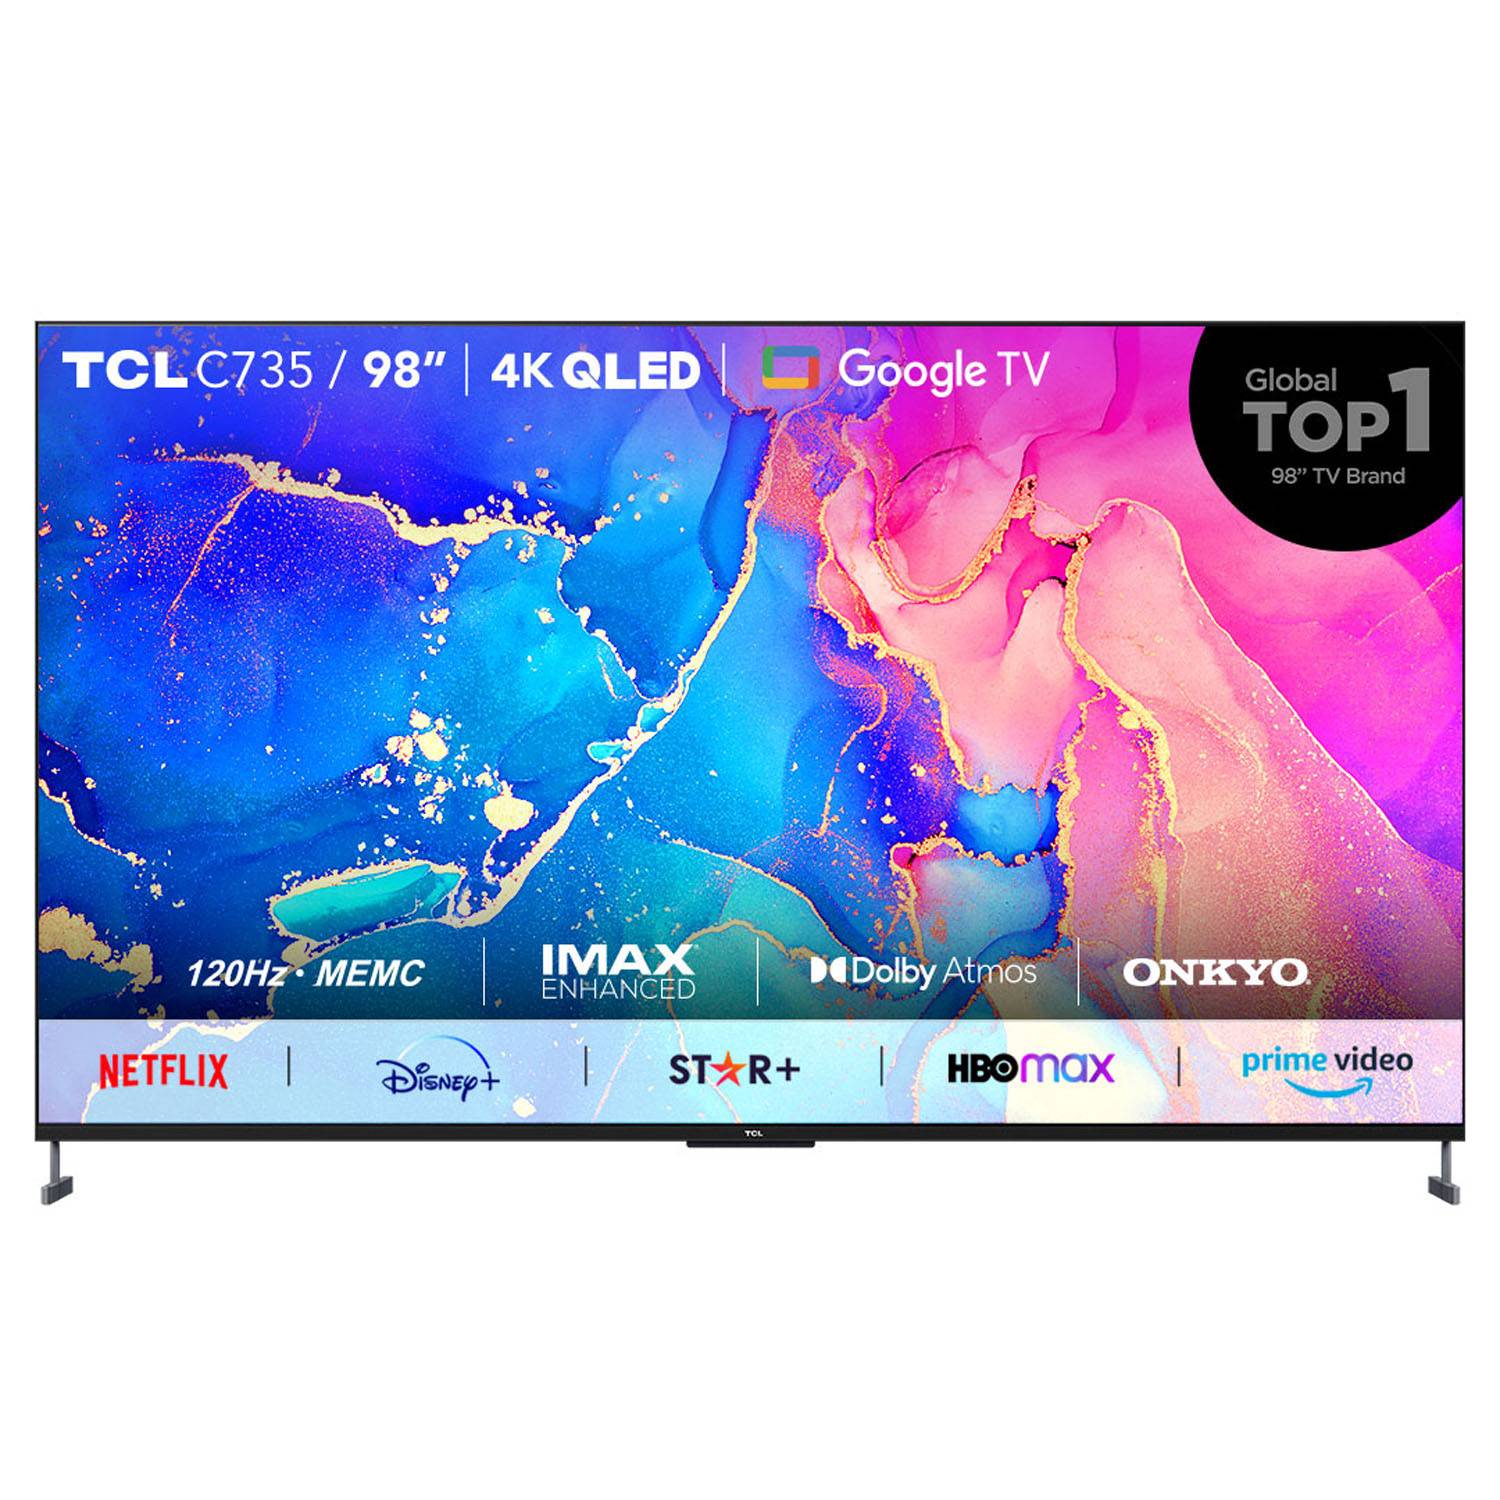 TCL QLED 98 C735 4KUHD Google TV TCL